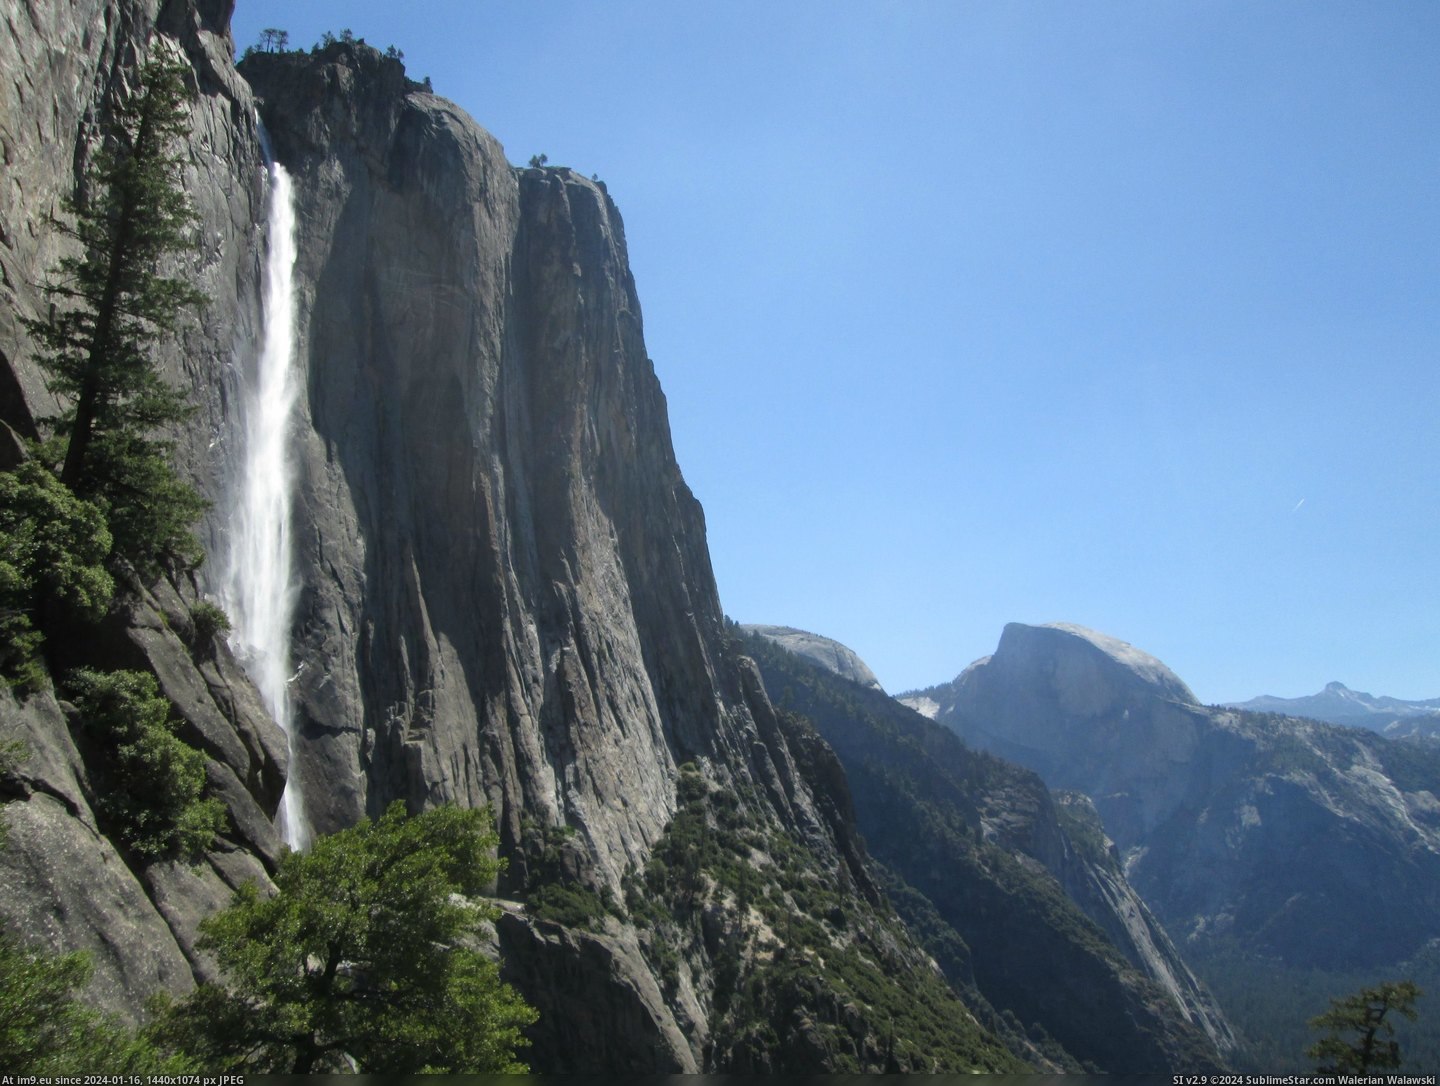 #Park #National #Yosemite #Dome #2764x2073 #Falls #Usa [Earthporn] Yosemite Falls and Half Dome, Yosemite National Park, USA [2764x2073] [OC] Pic. (Image of album My r/EARTHPORN favs))